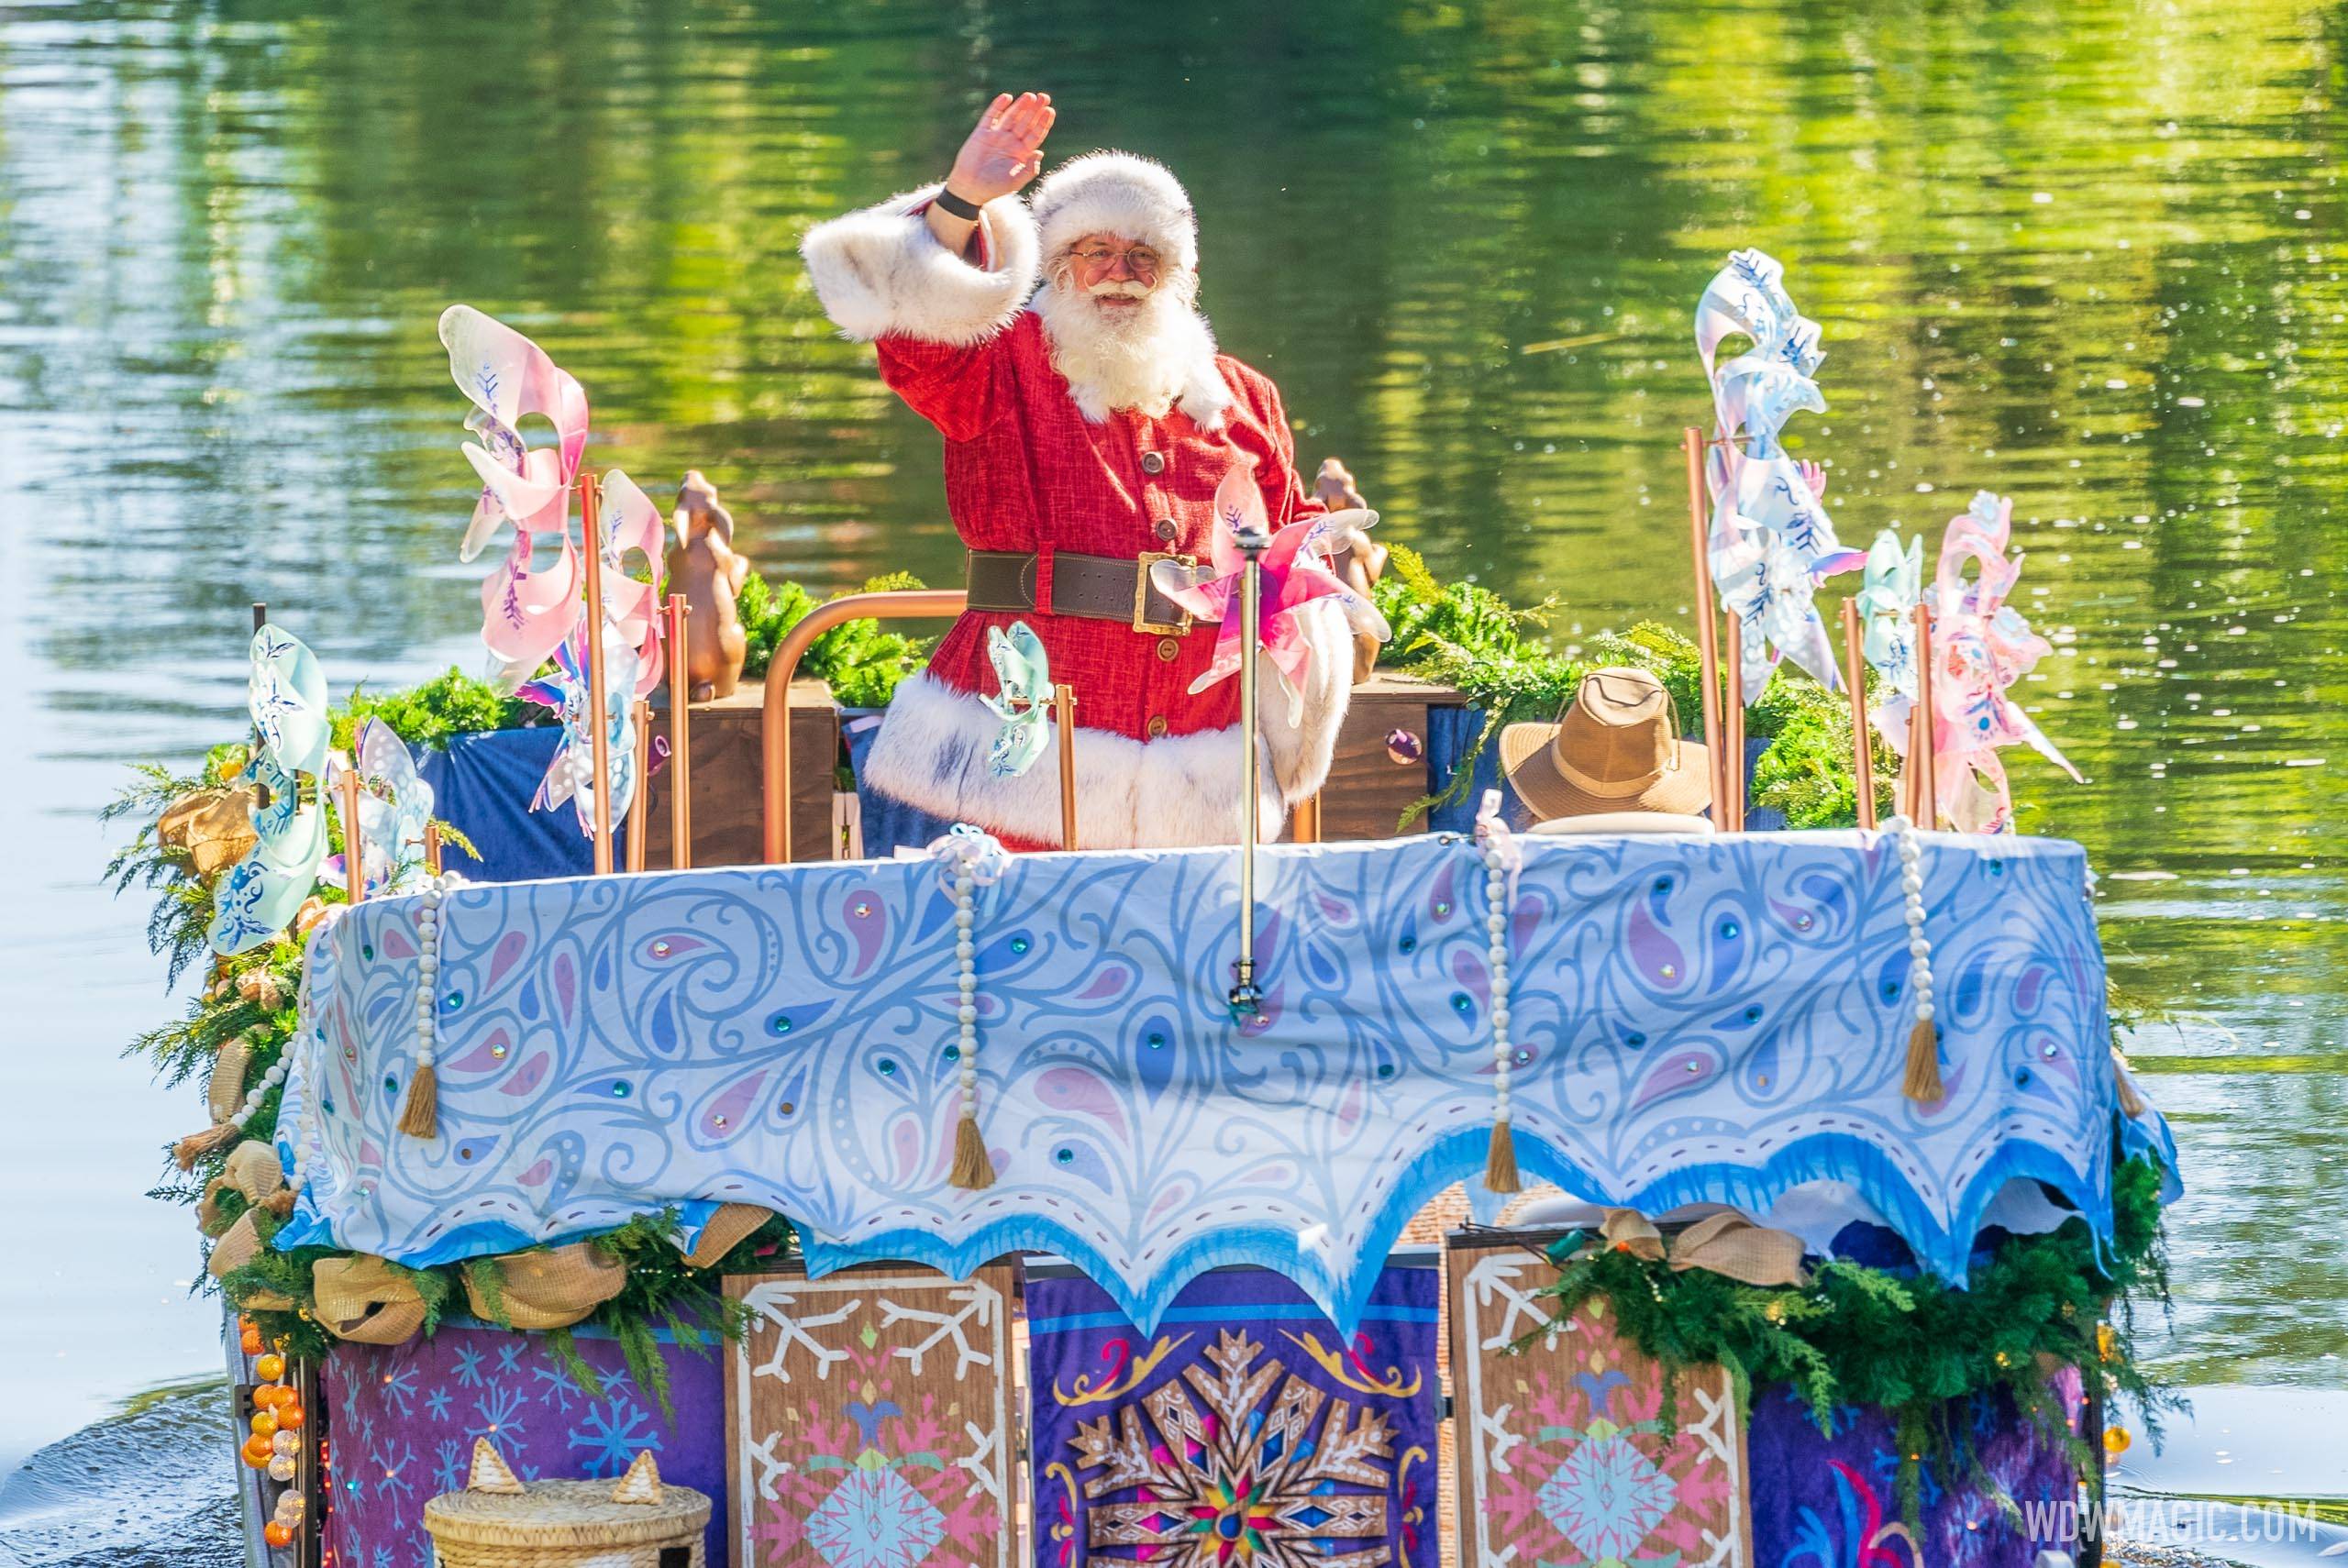 Festive Flotillas at Disney's Animal Kingdom